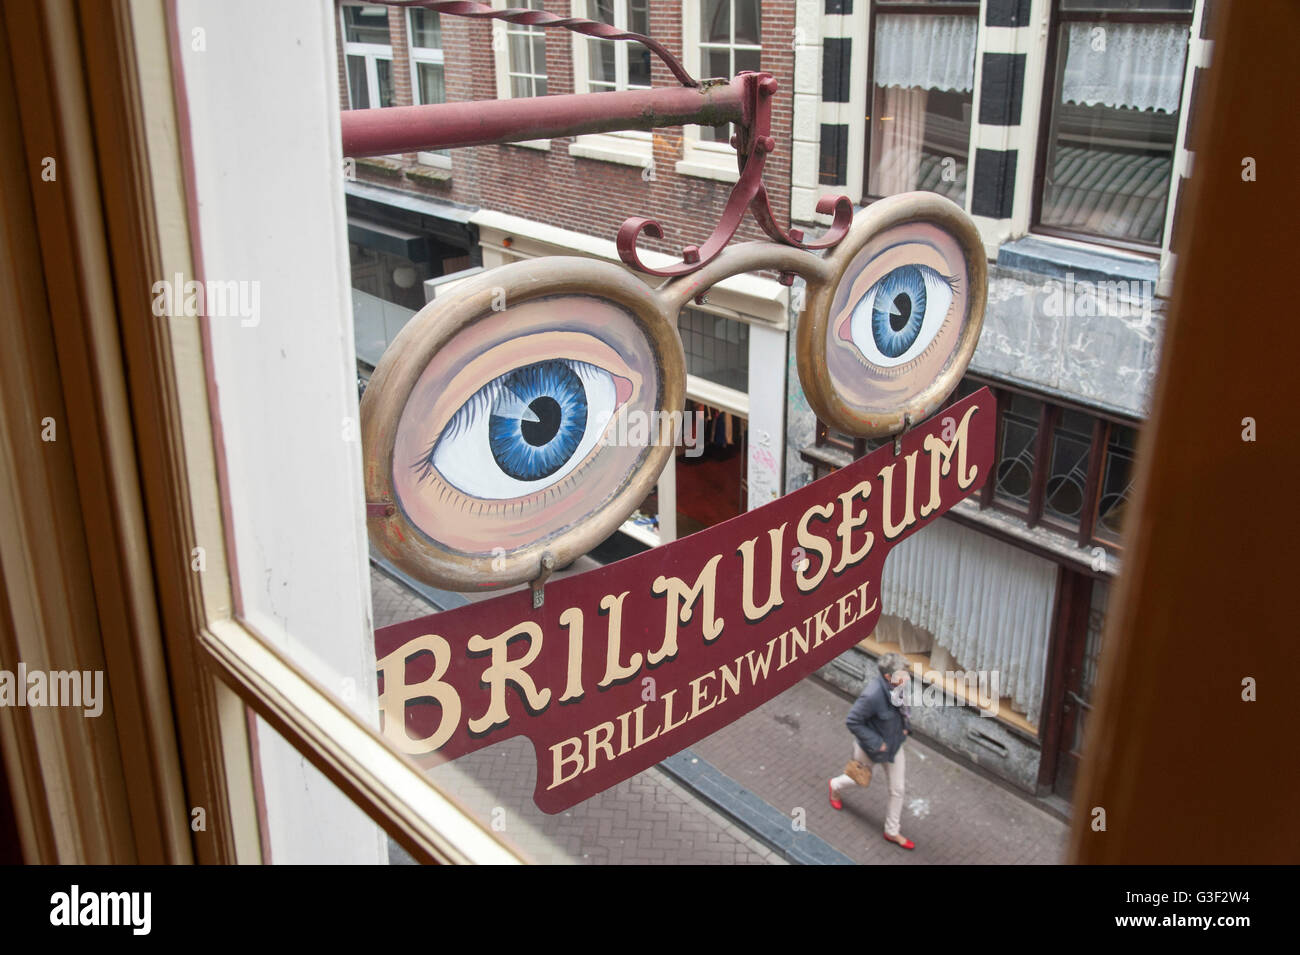 Brilmuseum national', musée de verres, Gasthuismolensteeg 7, 'Herengracht', Amsterdam, Hollande, Pays-Bas Banque D'Images